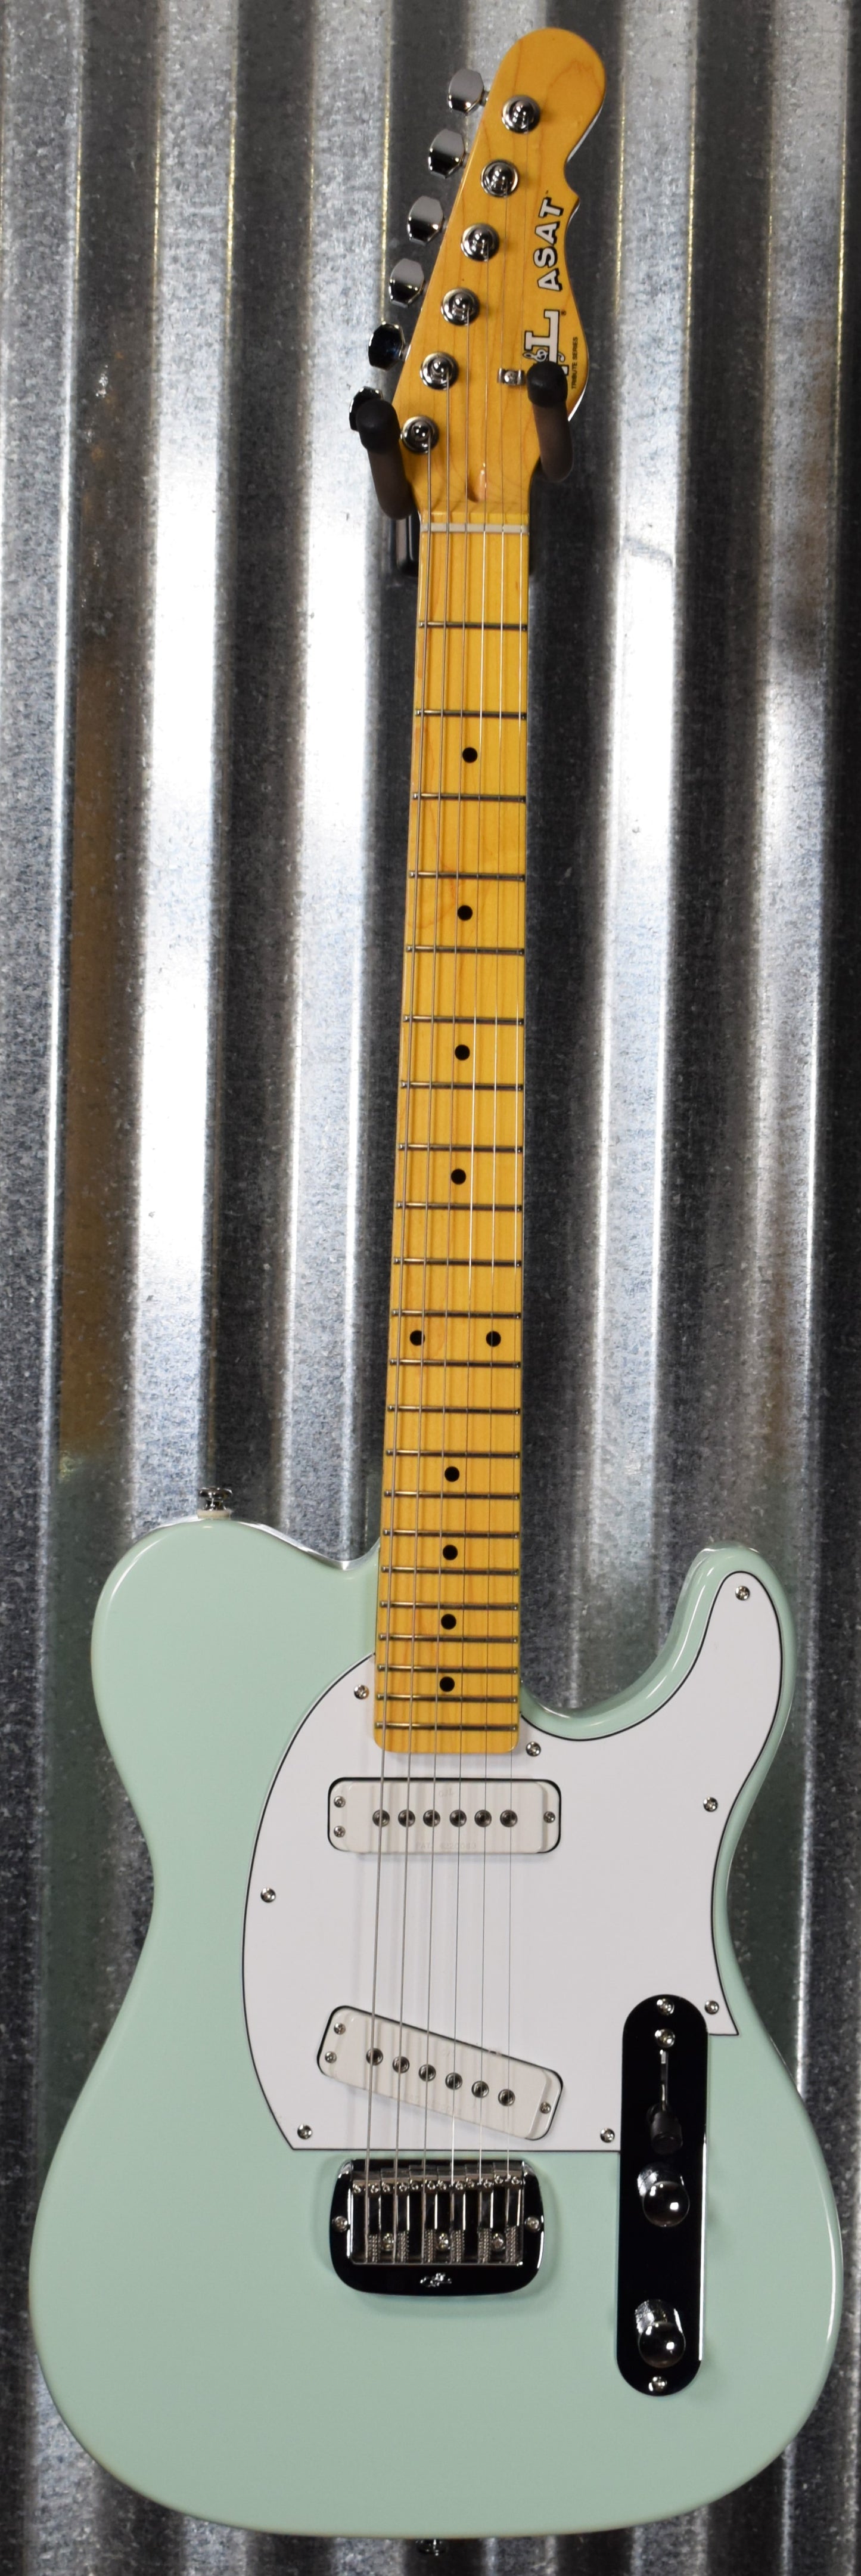 G&L Tribute ASAT Special Surf Green Guitar #6347 Demo